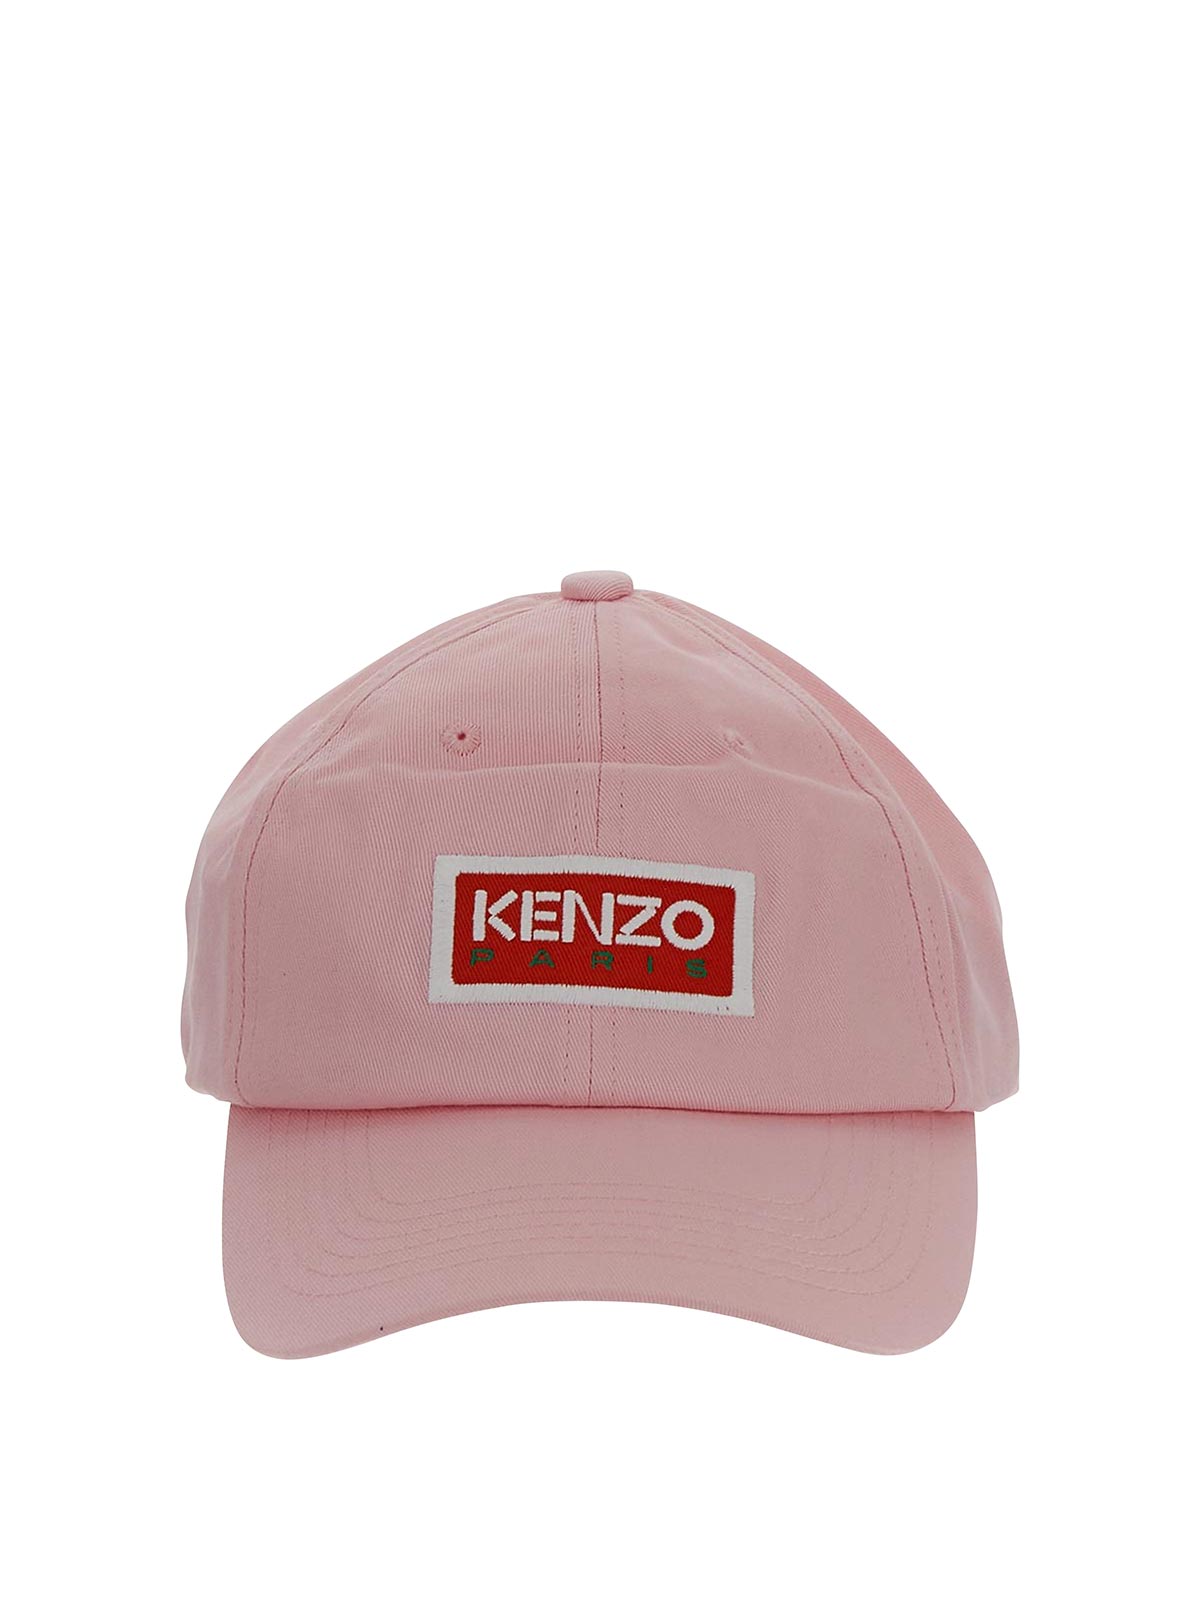 KENZO BASEBALL CAP IN FADED PINK